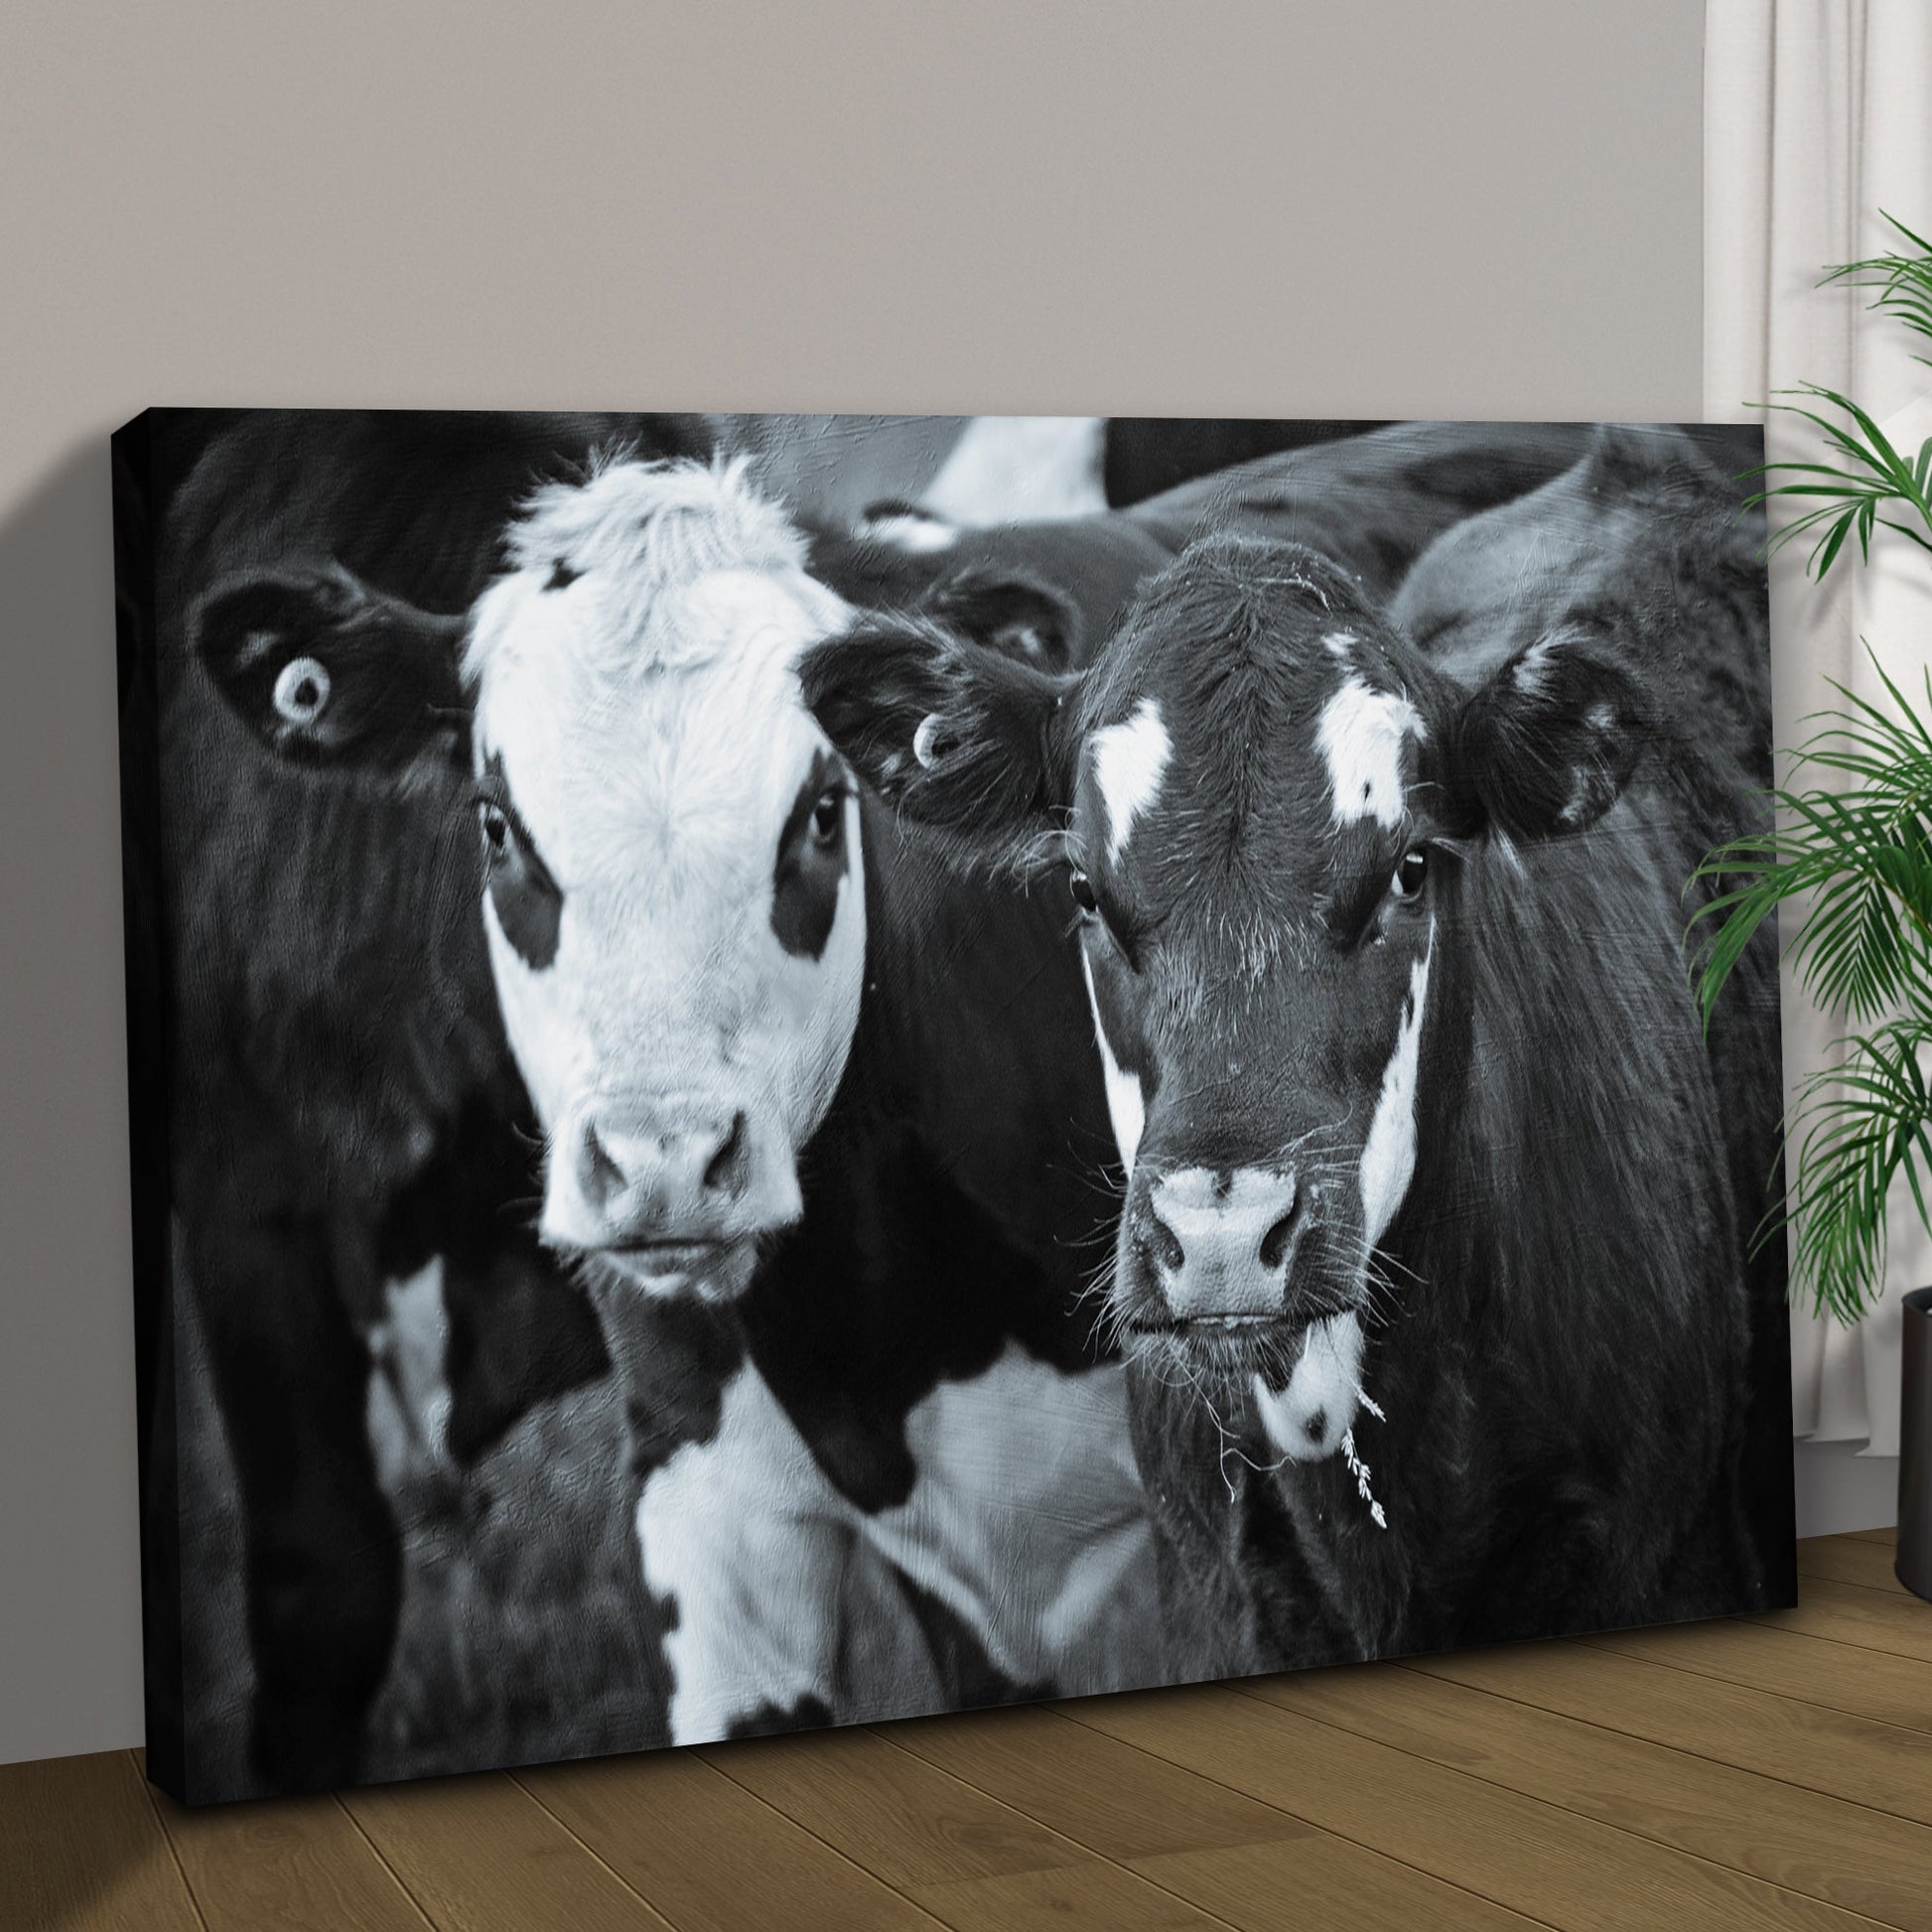 Grazing in Monochrome Cows Canvas Wall Art